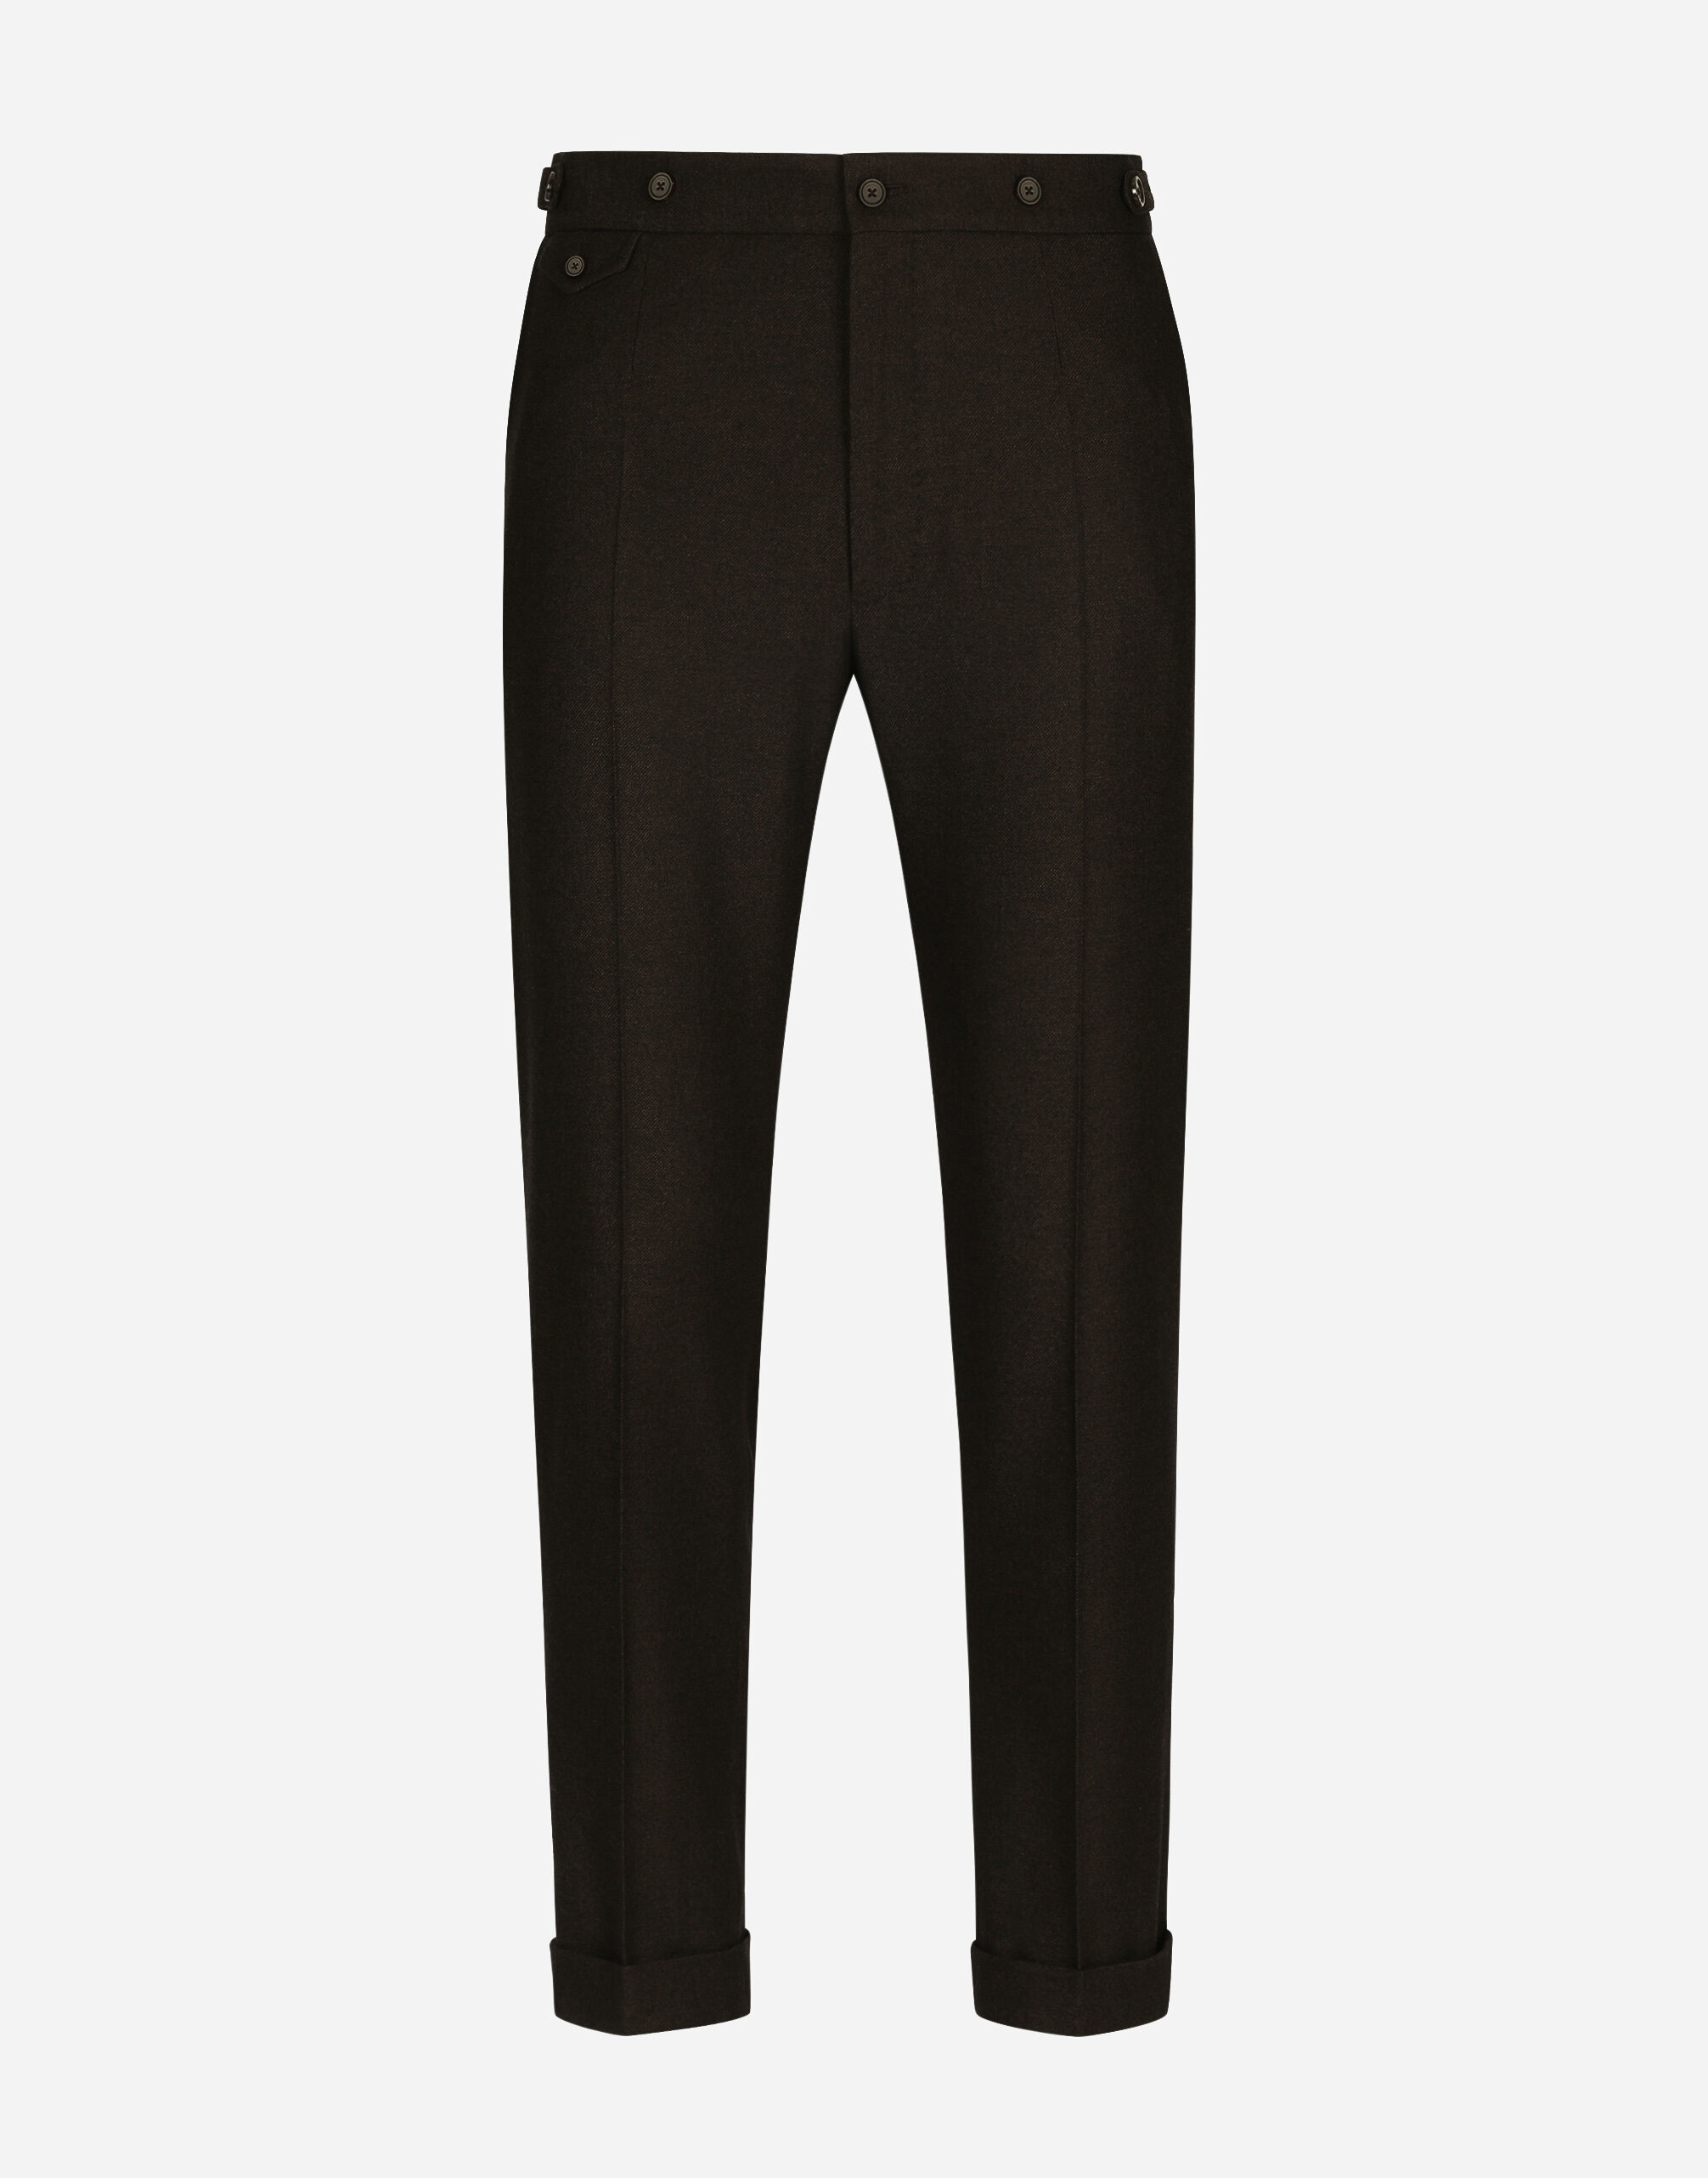 Dolce & Gabbana Stretch wool pants with Re-Edition label Black GP0D4TFU5PY